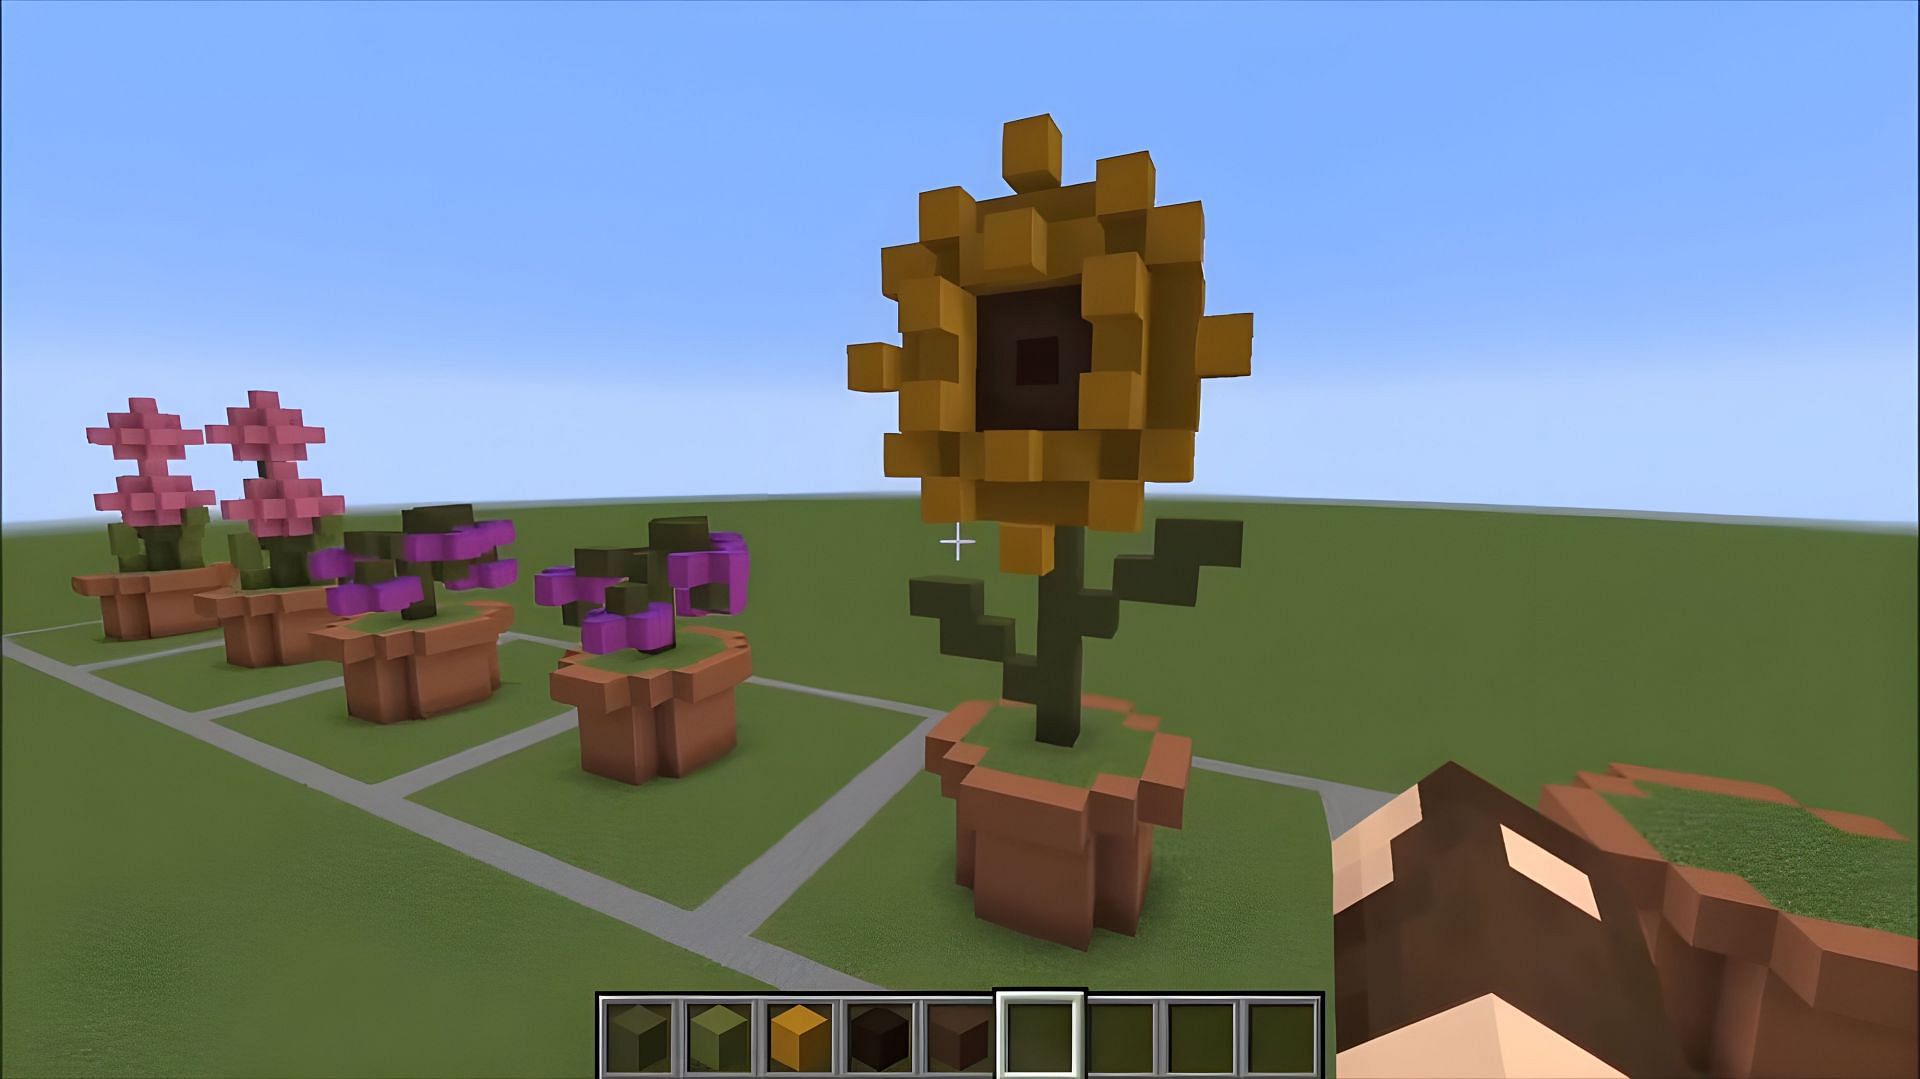 Sunflower (Image via YouTube/Bowsy wowsy)